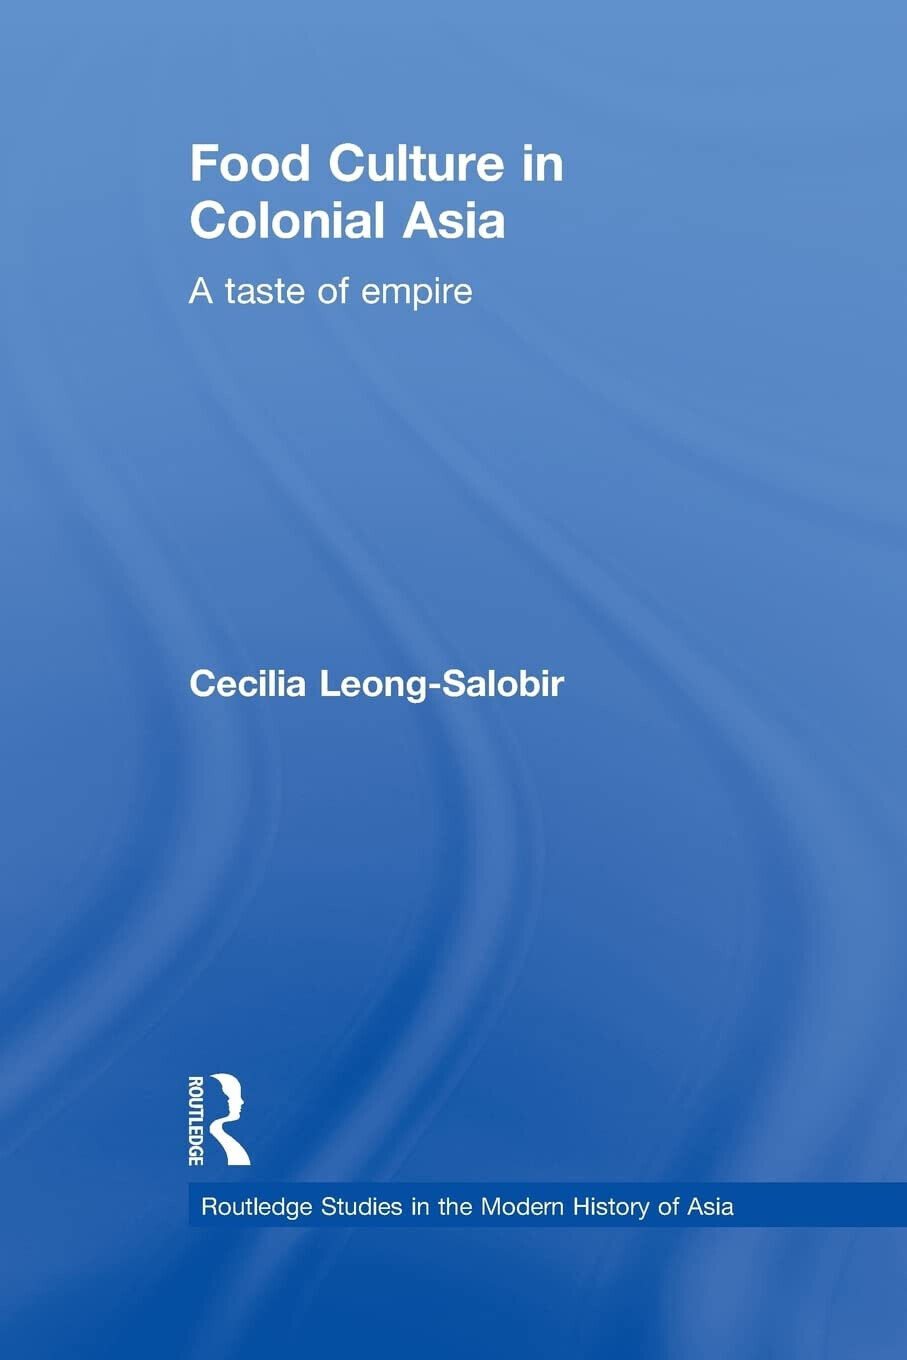 Food Culture in Colonial Asia: A Taste of Empire - Cecilia Leong-Salobir - 2014